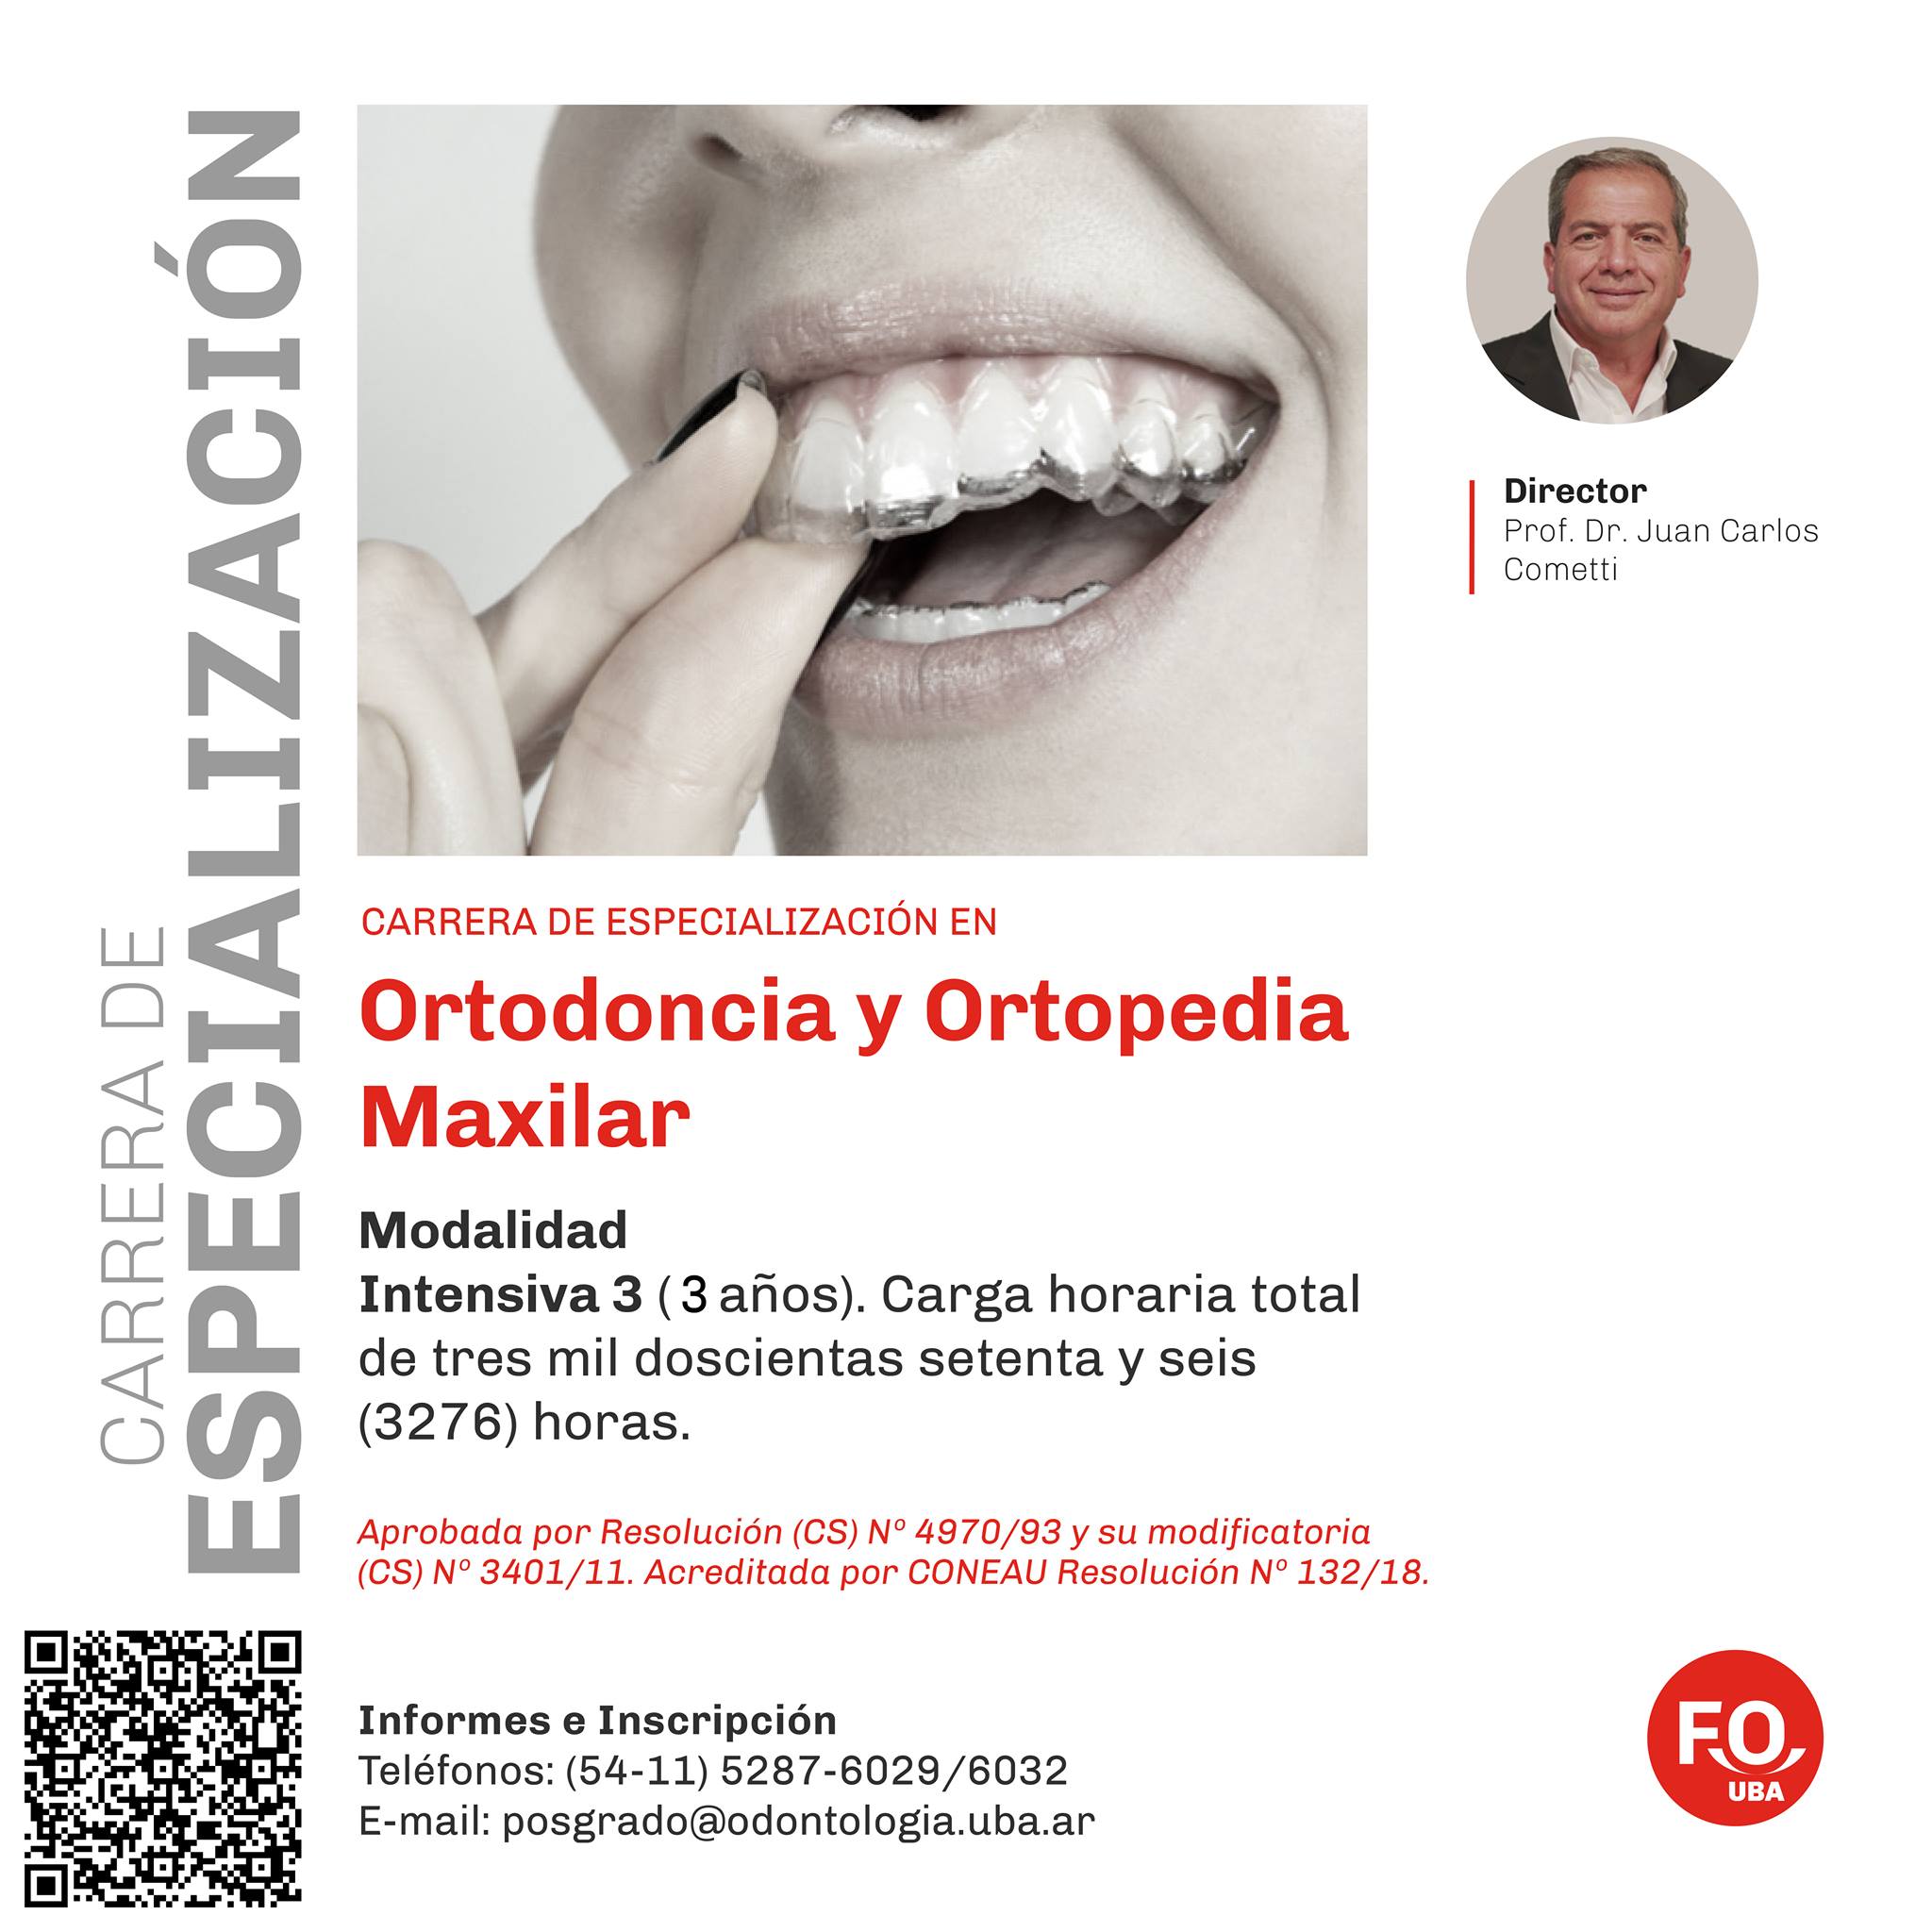 Ortopedia y Ortodoncia UBA